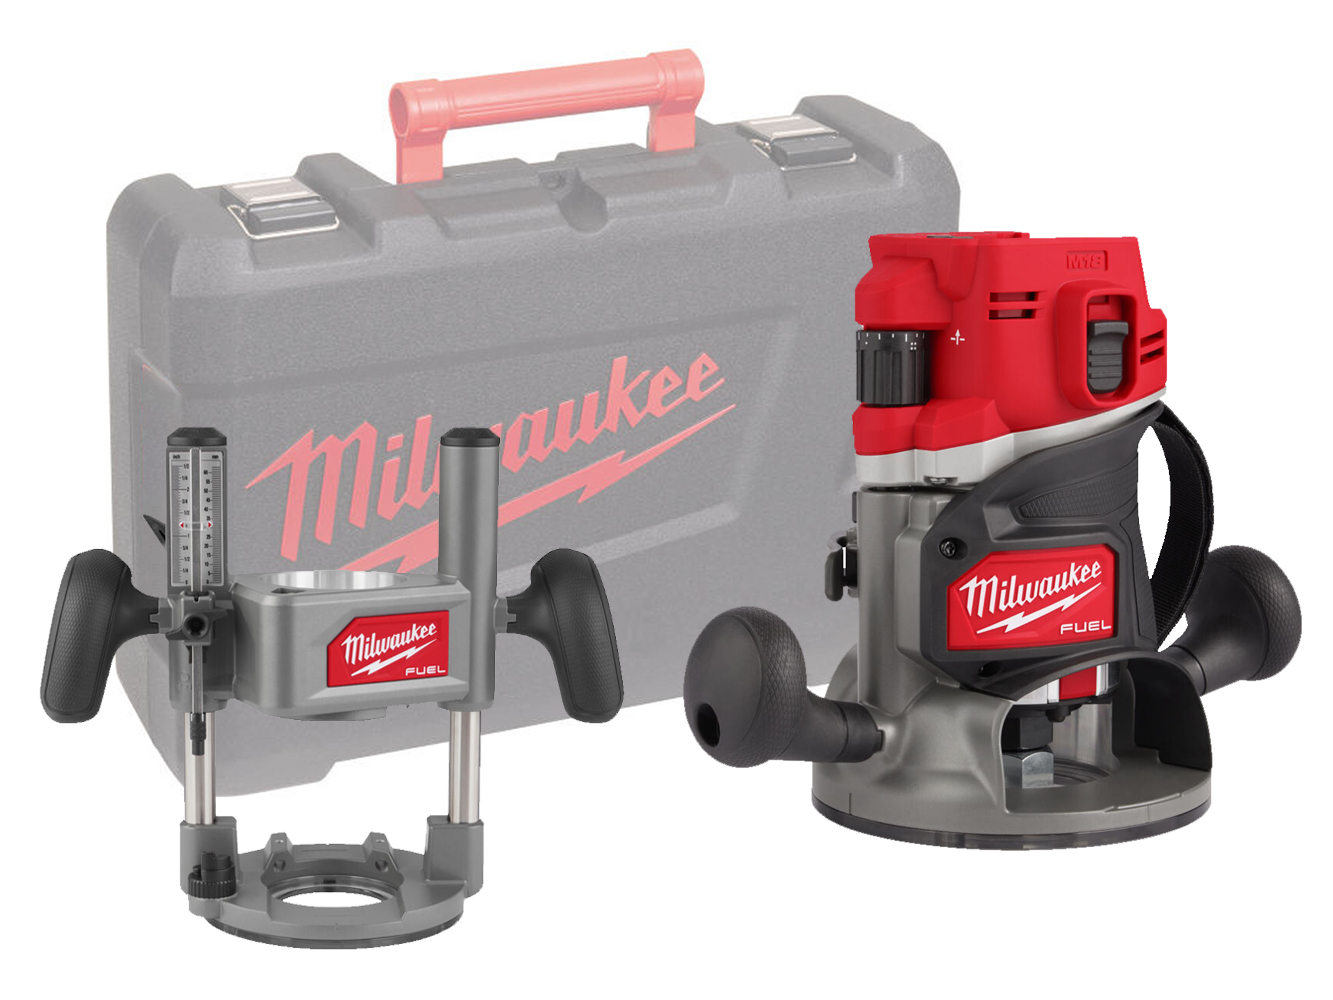 Milwaukee 18v Fuel Brushless 1/2" Router / Trimmer & Plunge - M12FR18KIT-0X - Body Only